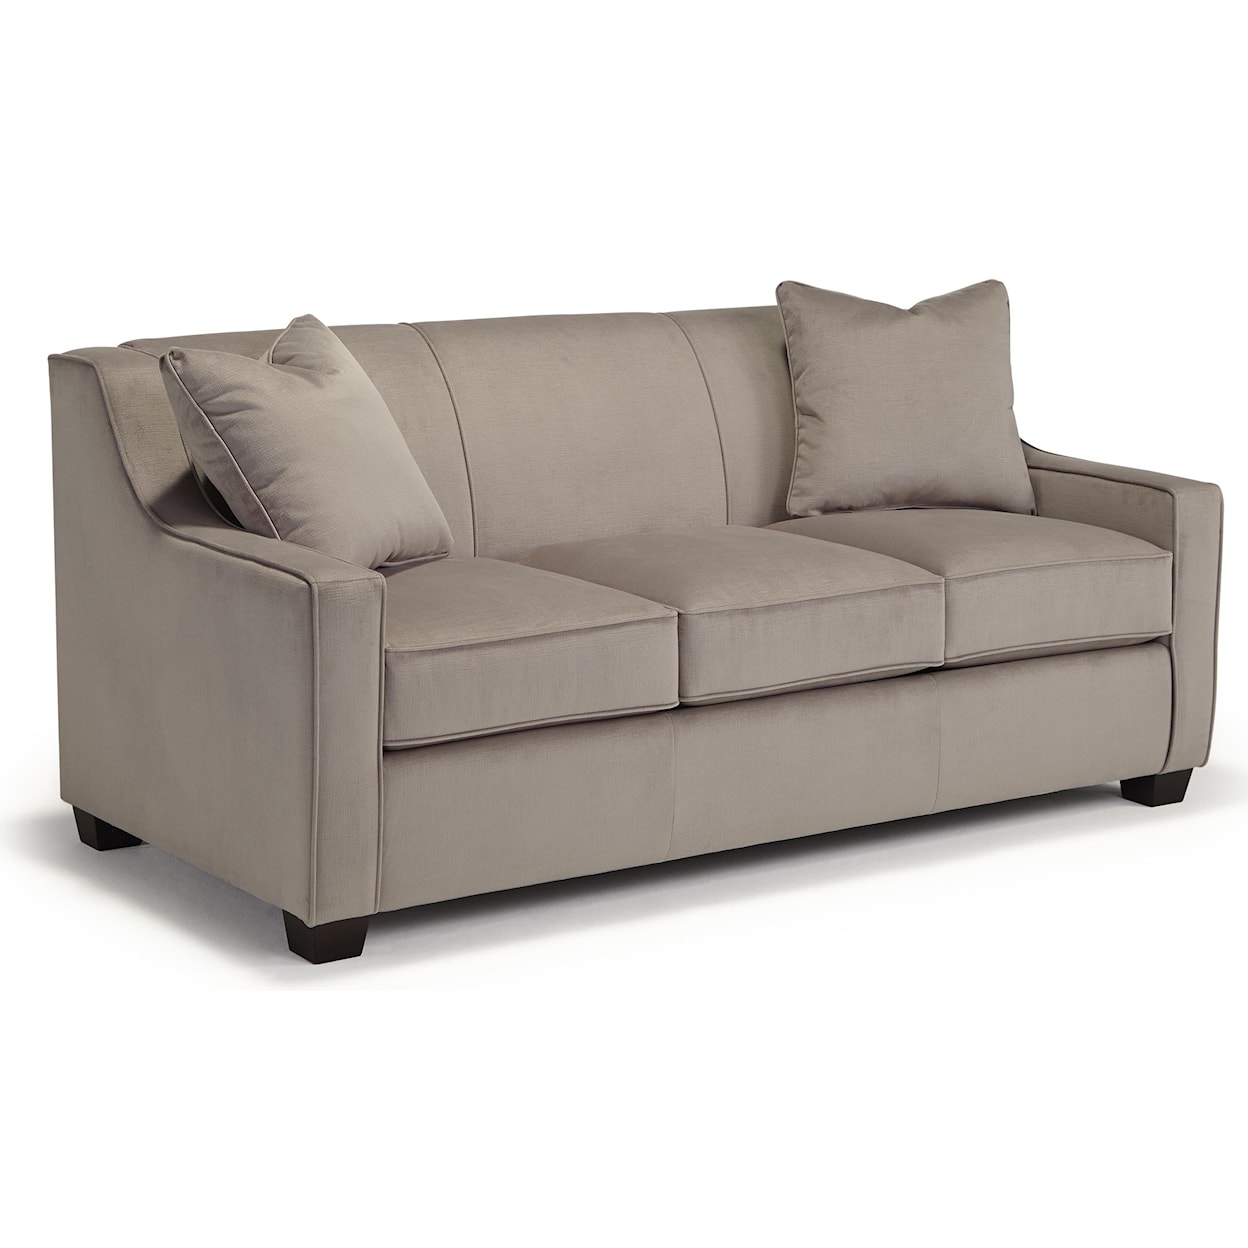 Best Home Furnishings Marinette Full Size Sleeper Sofa w/ MemFoam Mattress